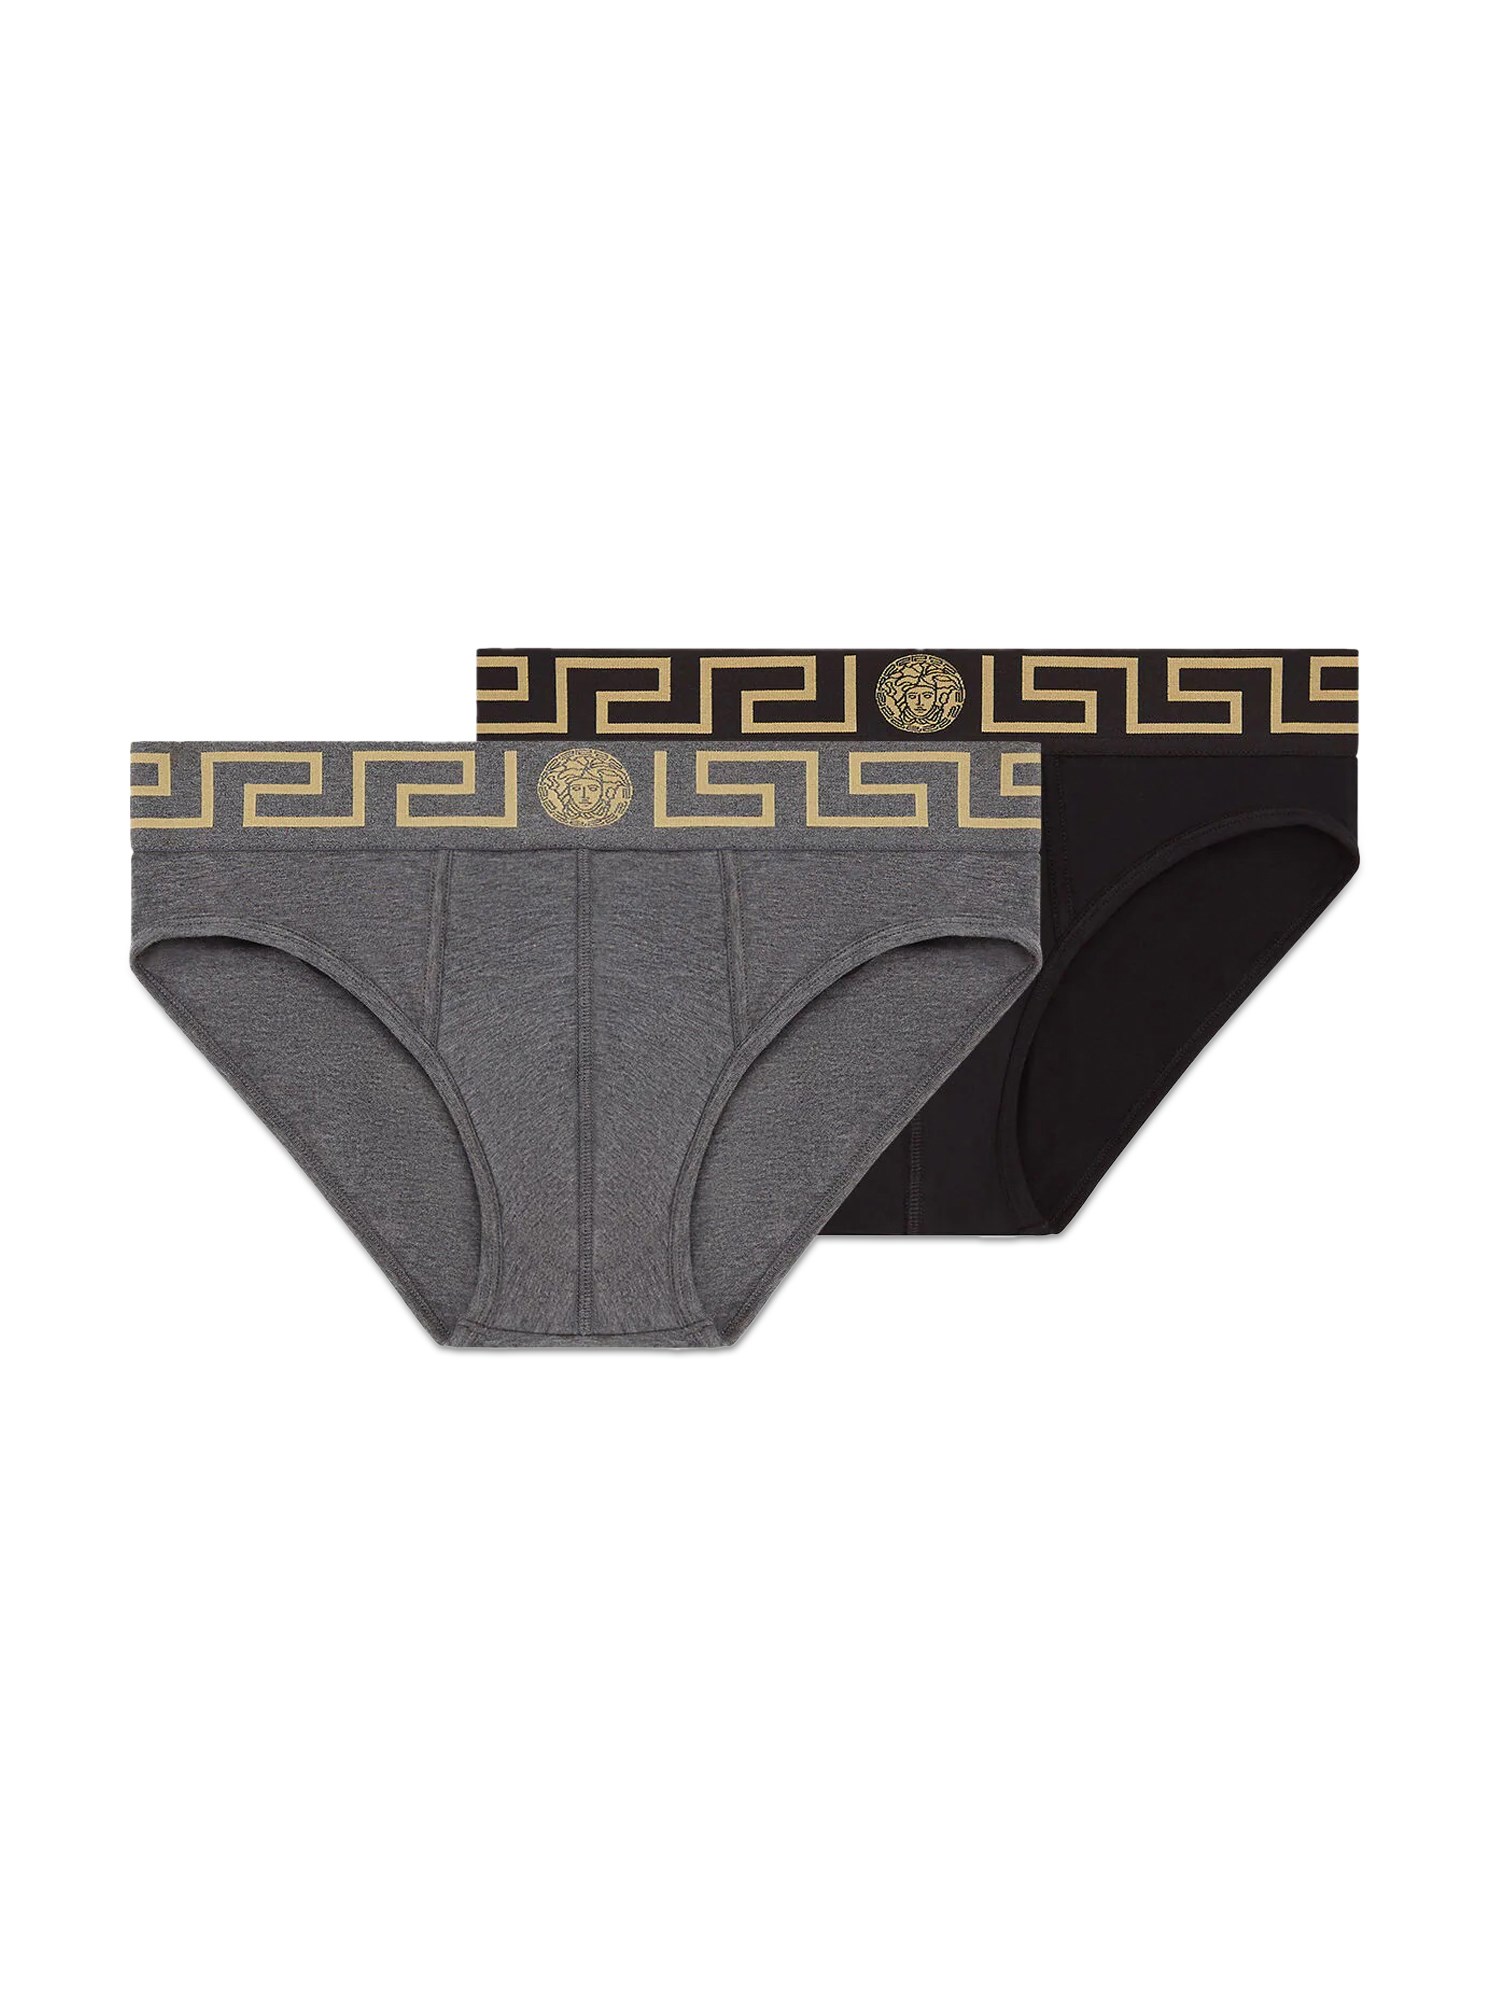 versace pack of two panties with greek border